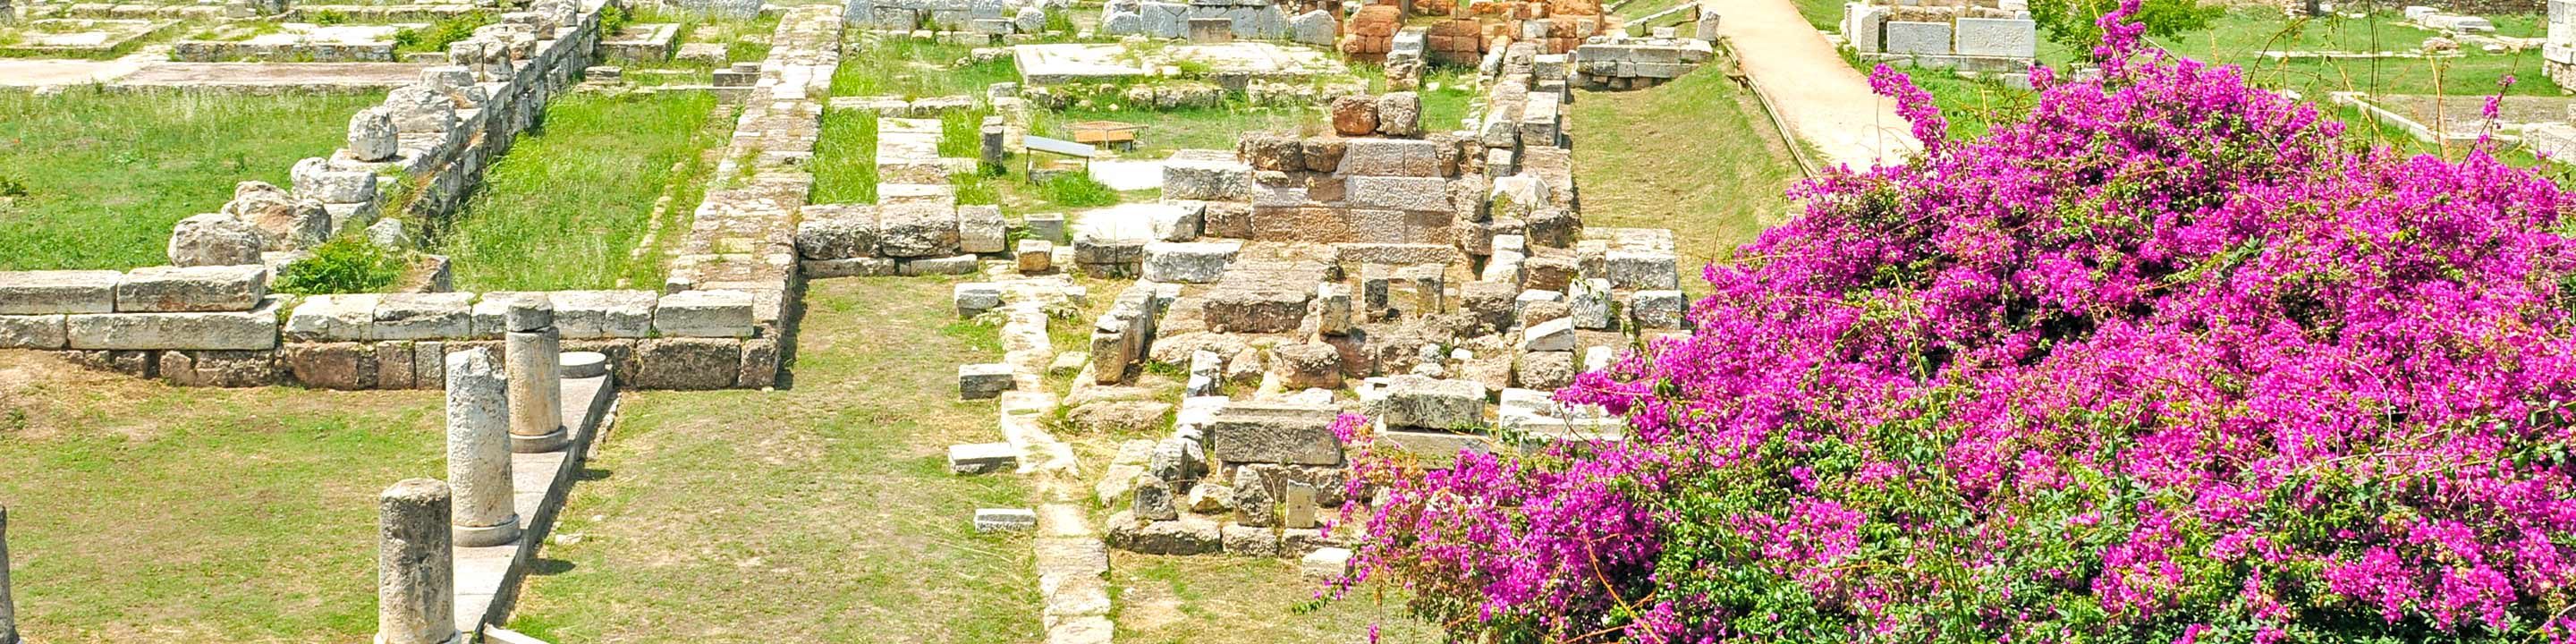 Kerameikos (Ancient Cemetery) in Athens